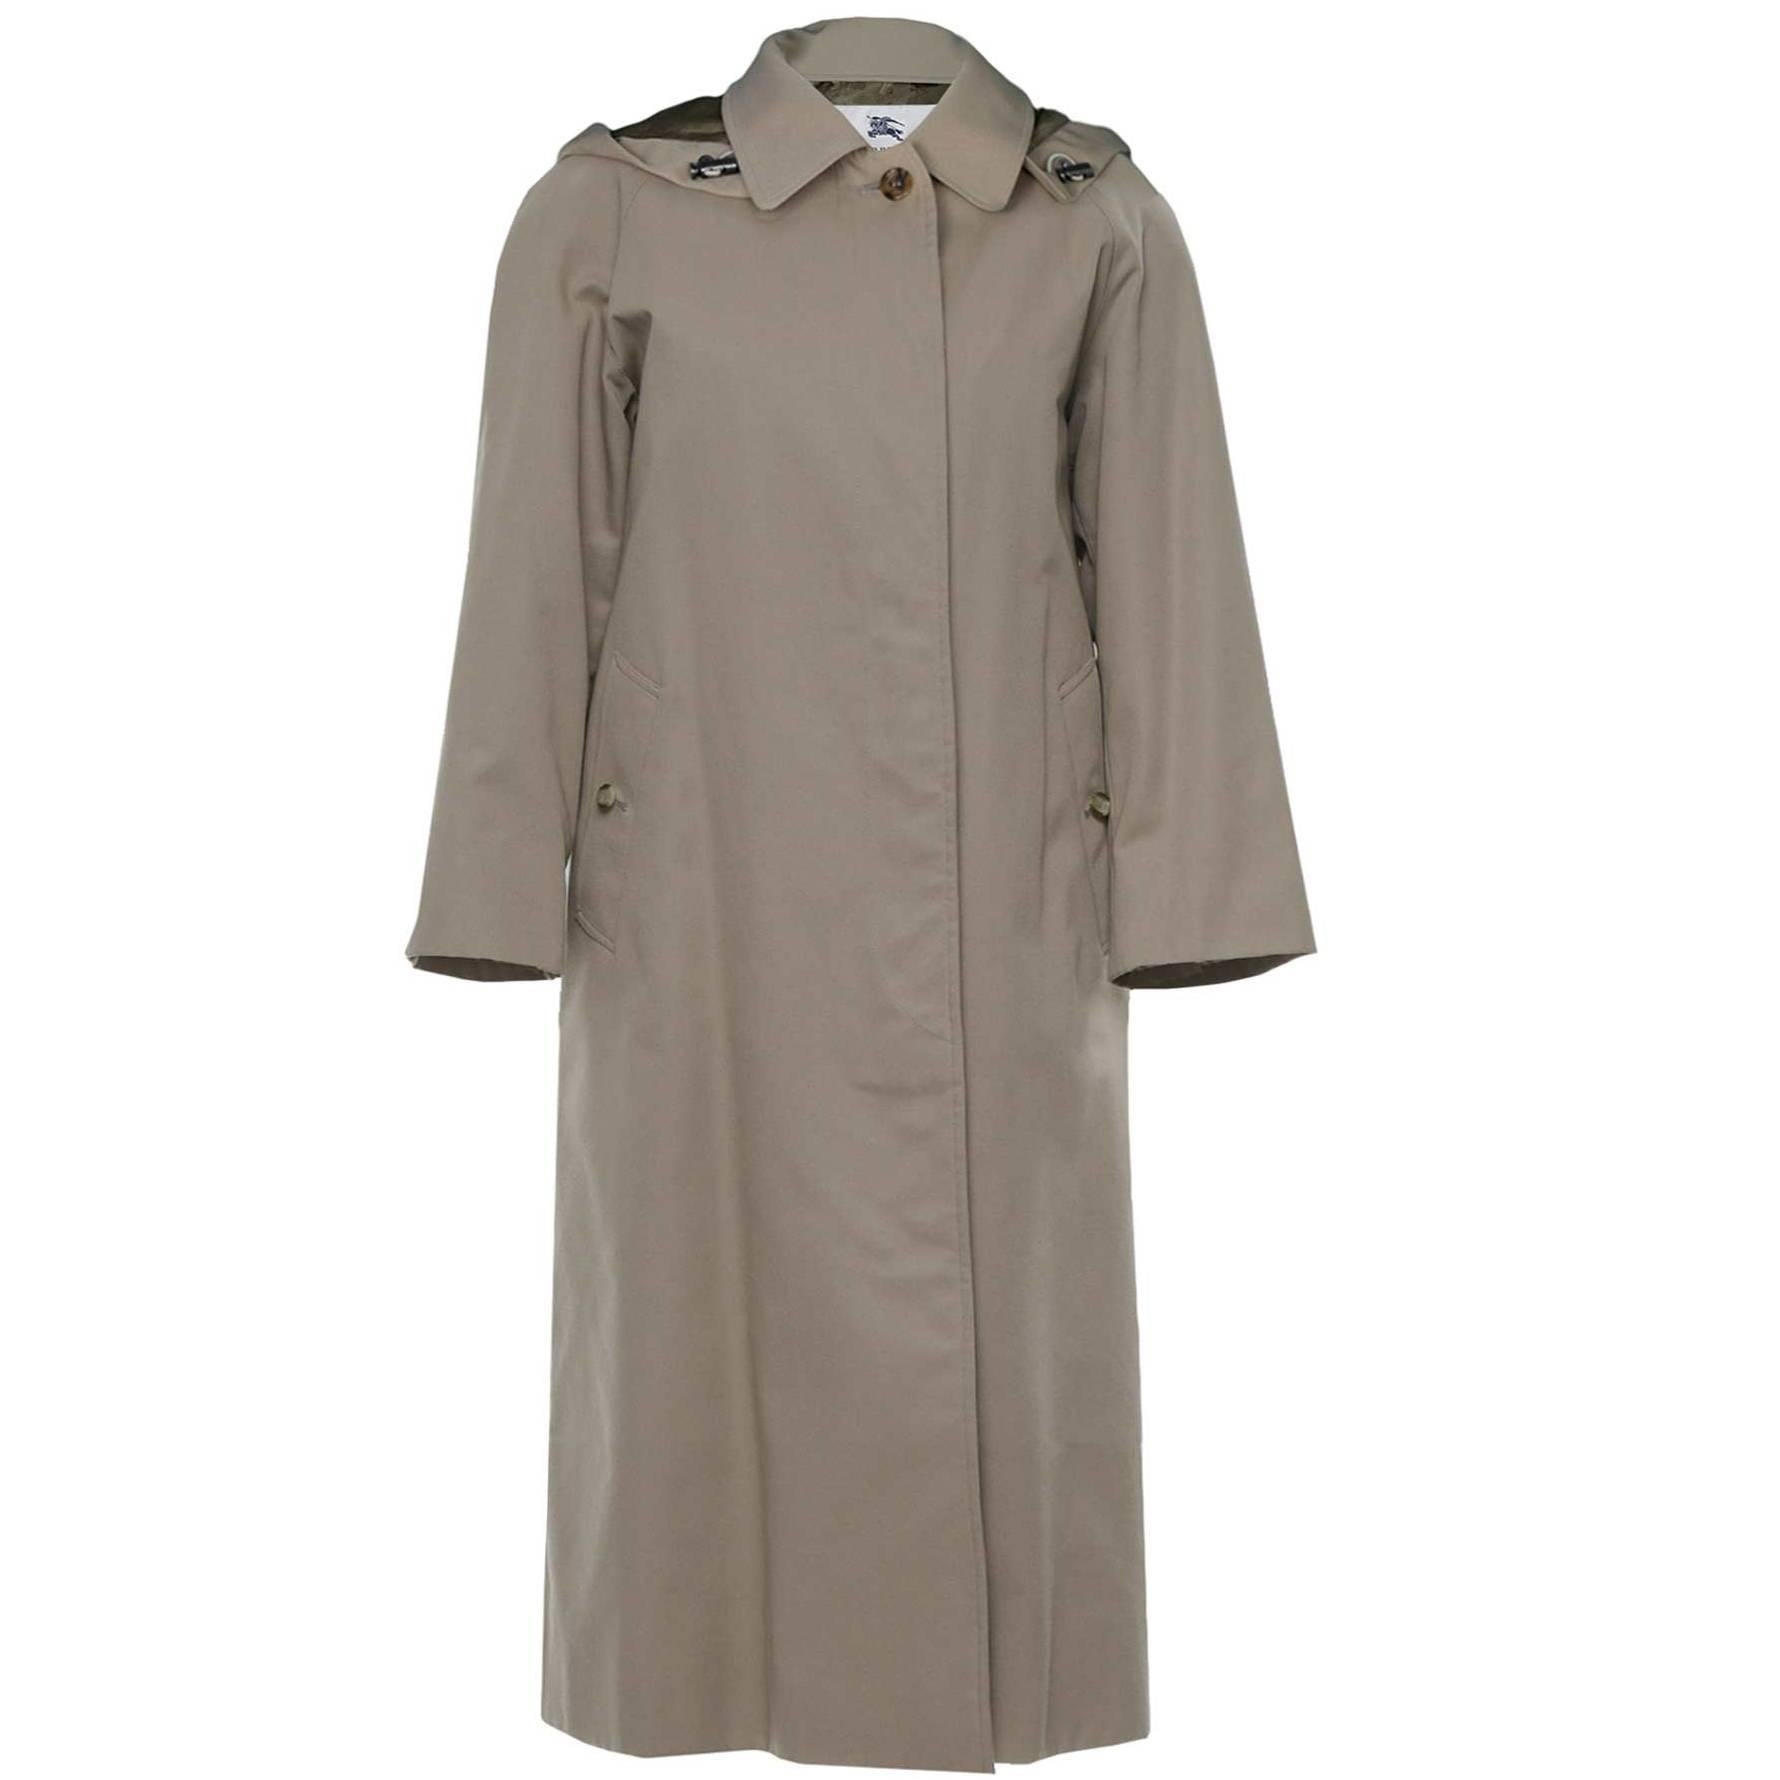 Burberry London Tan Trench Coat w/ Detachable Hood sz XL